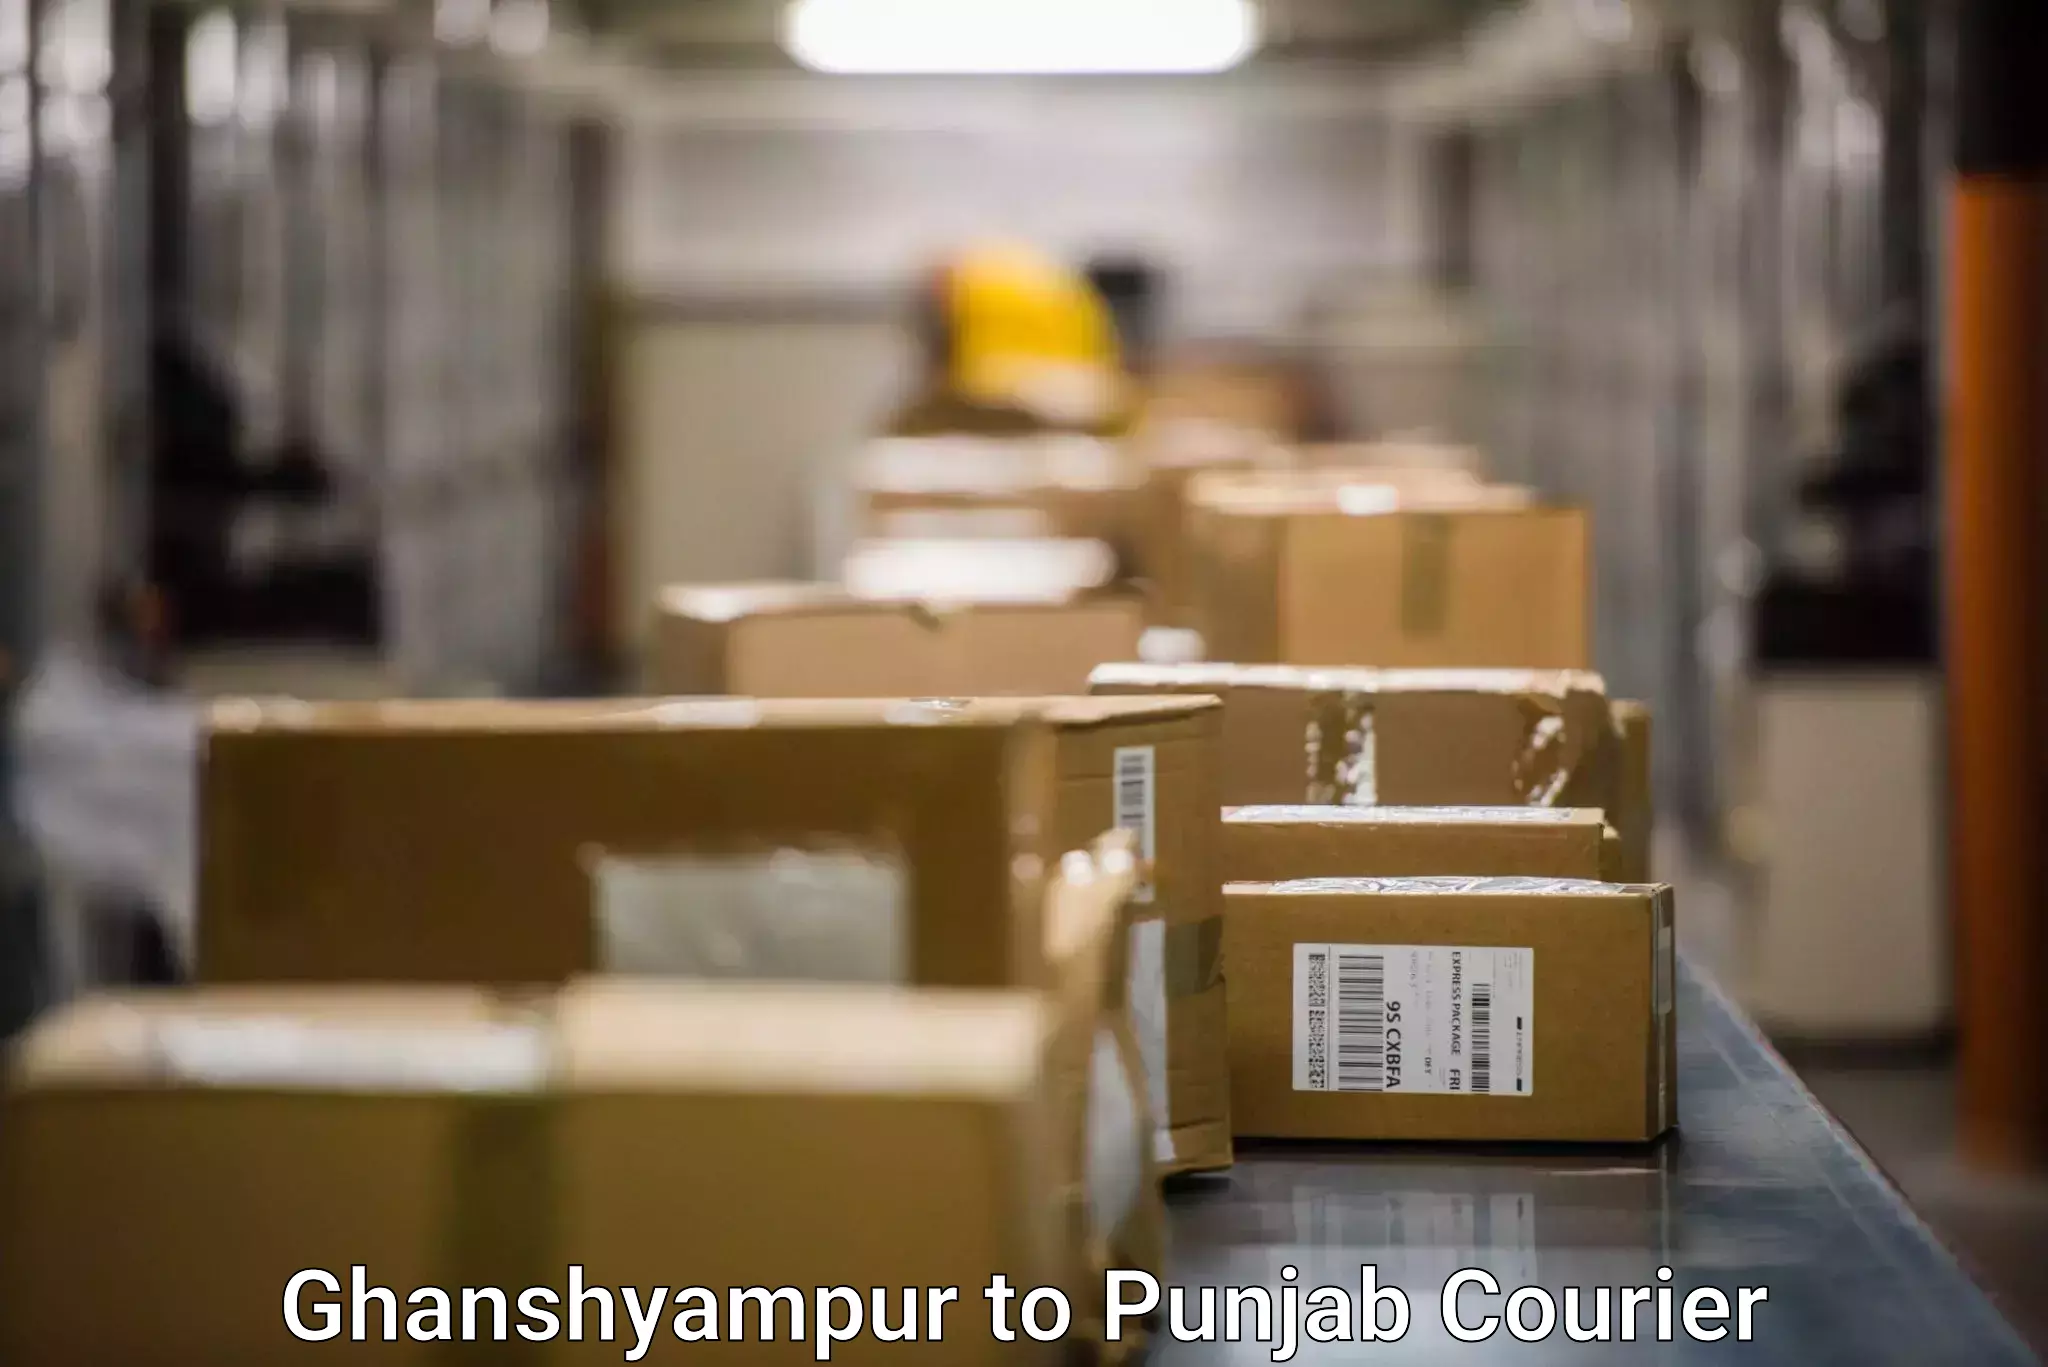 Express package handling Ghanshyampur to Ludhiana